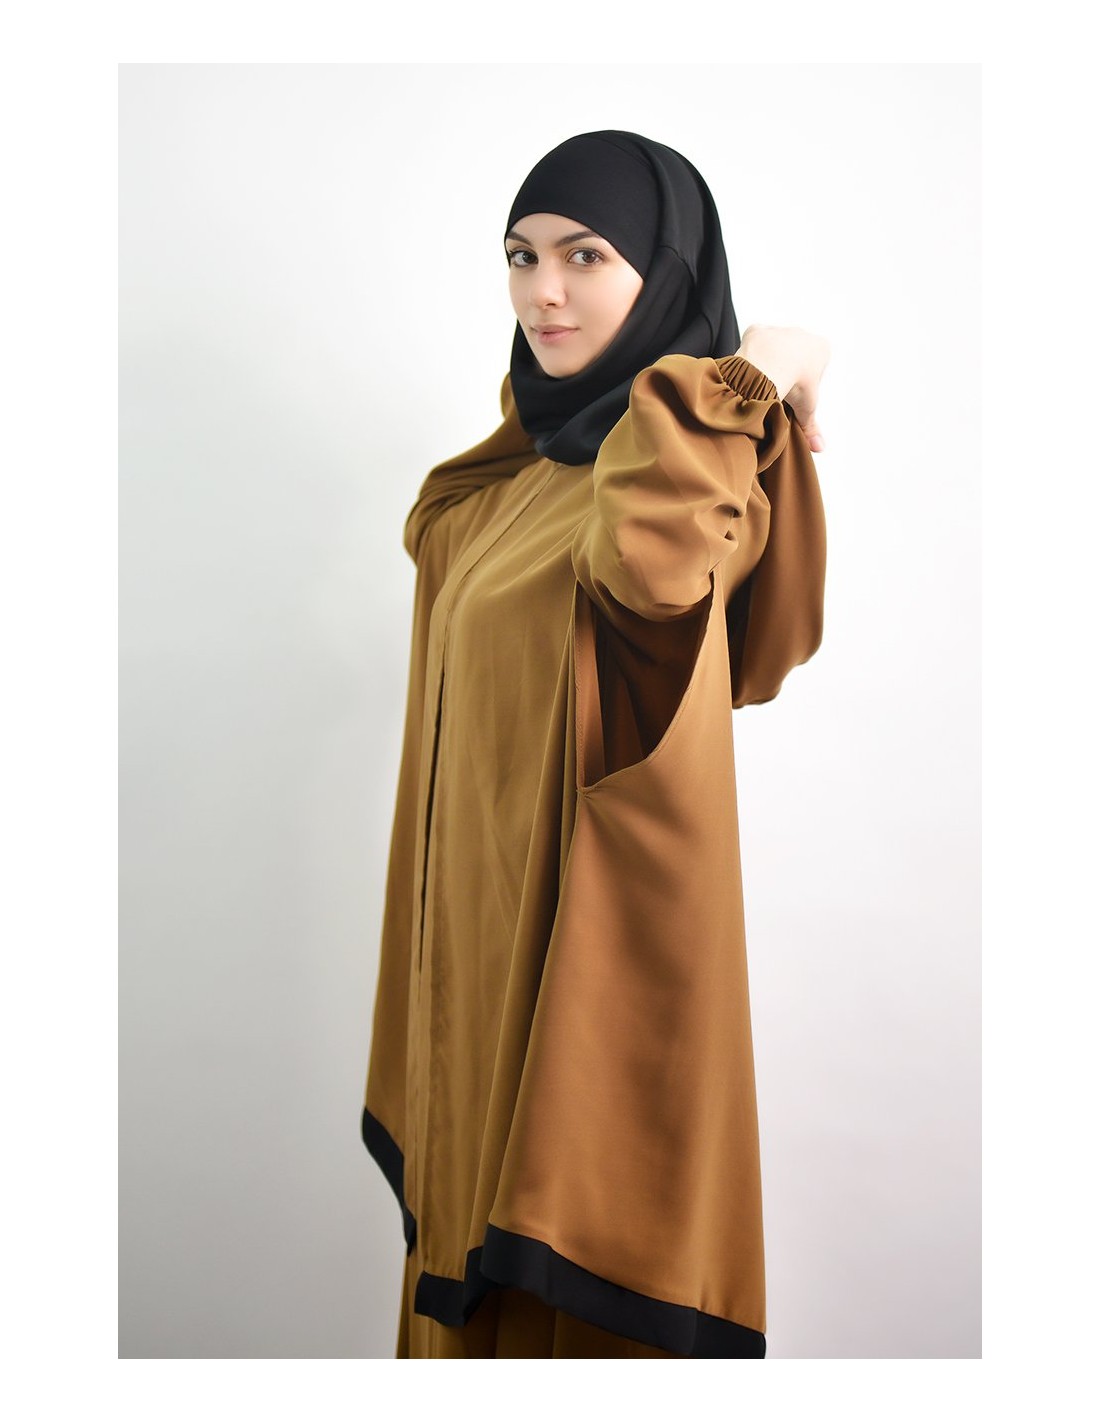 Abaya umbrella + integrated hijab cape Young